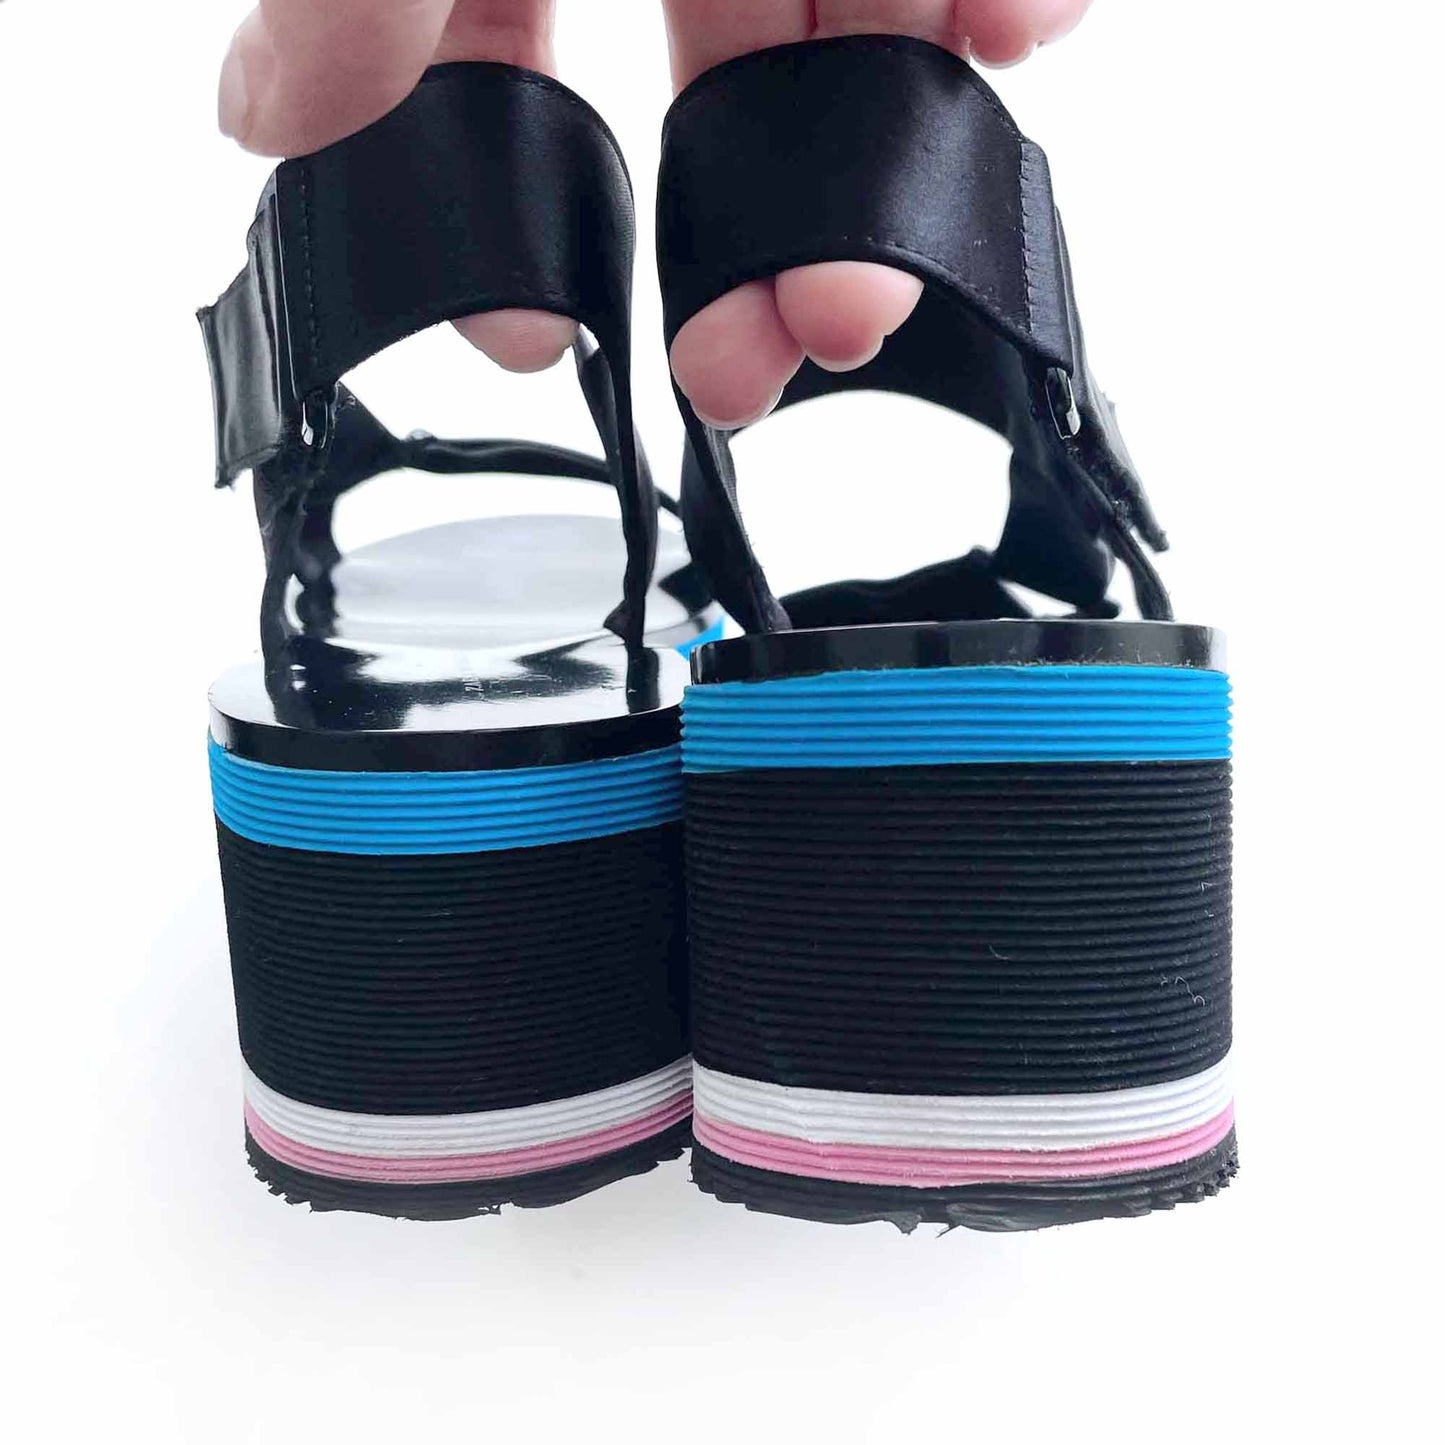 zara platform teva style sandals - size 40